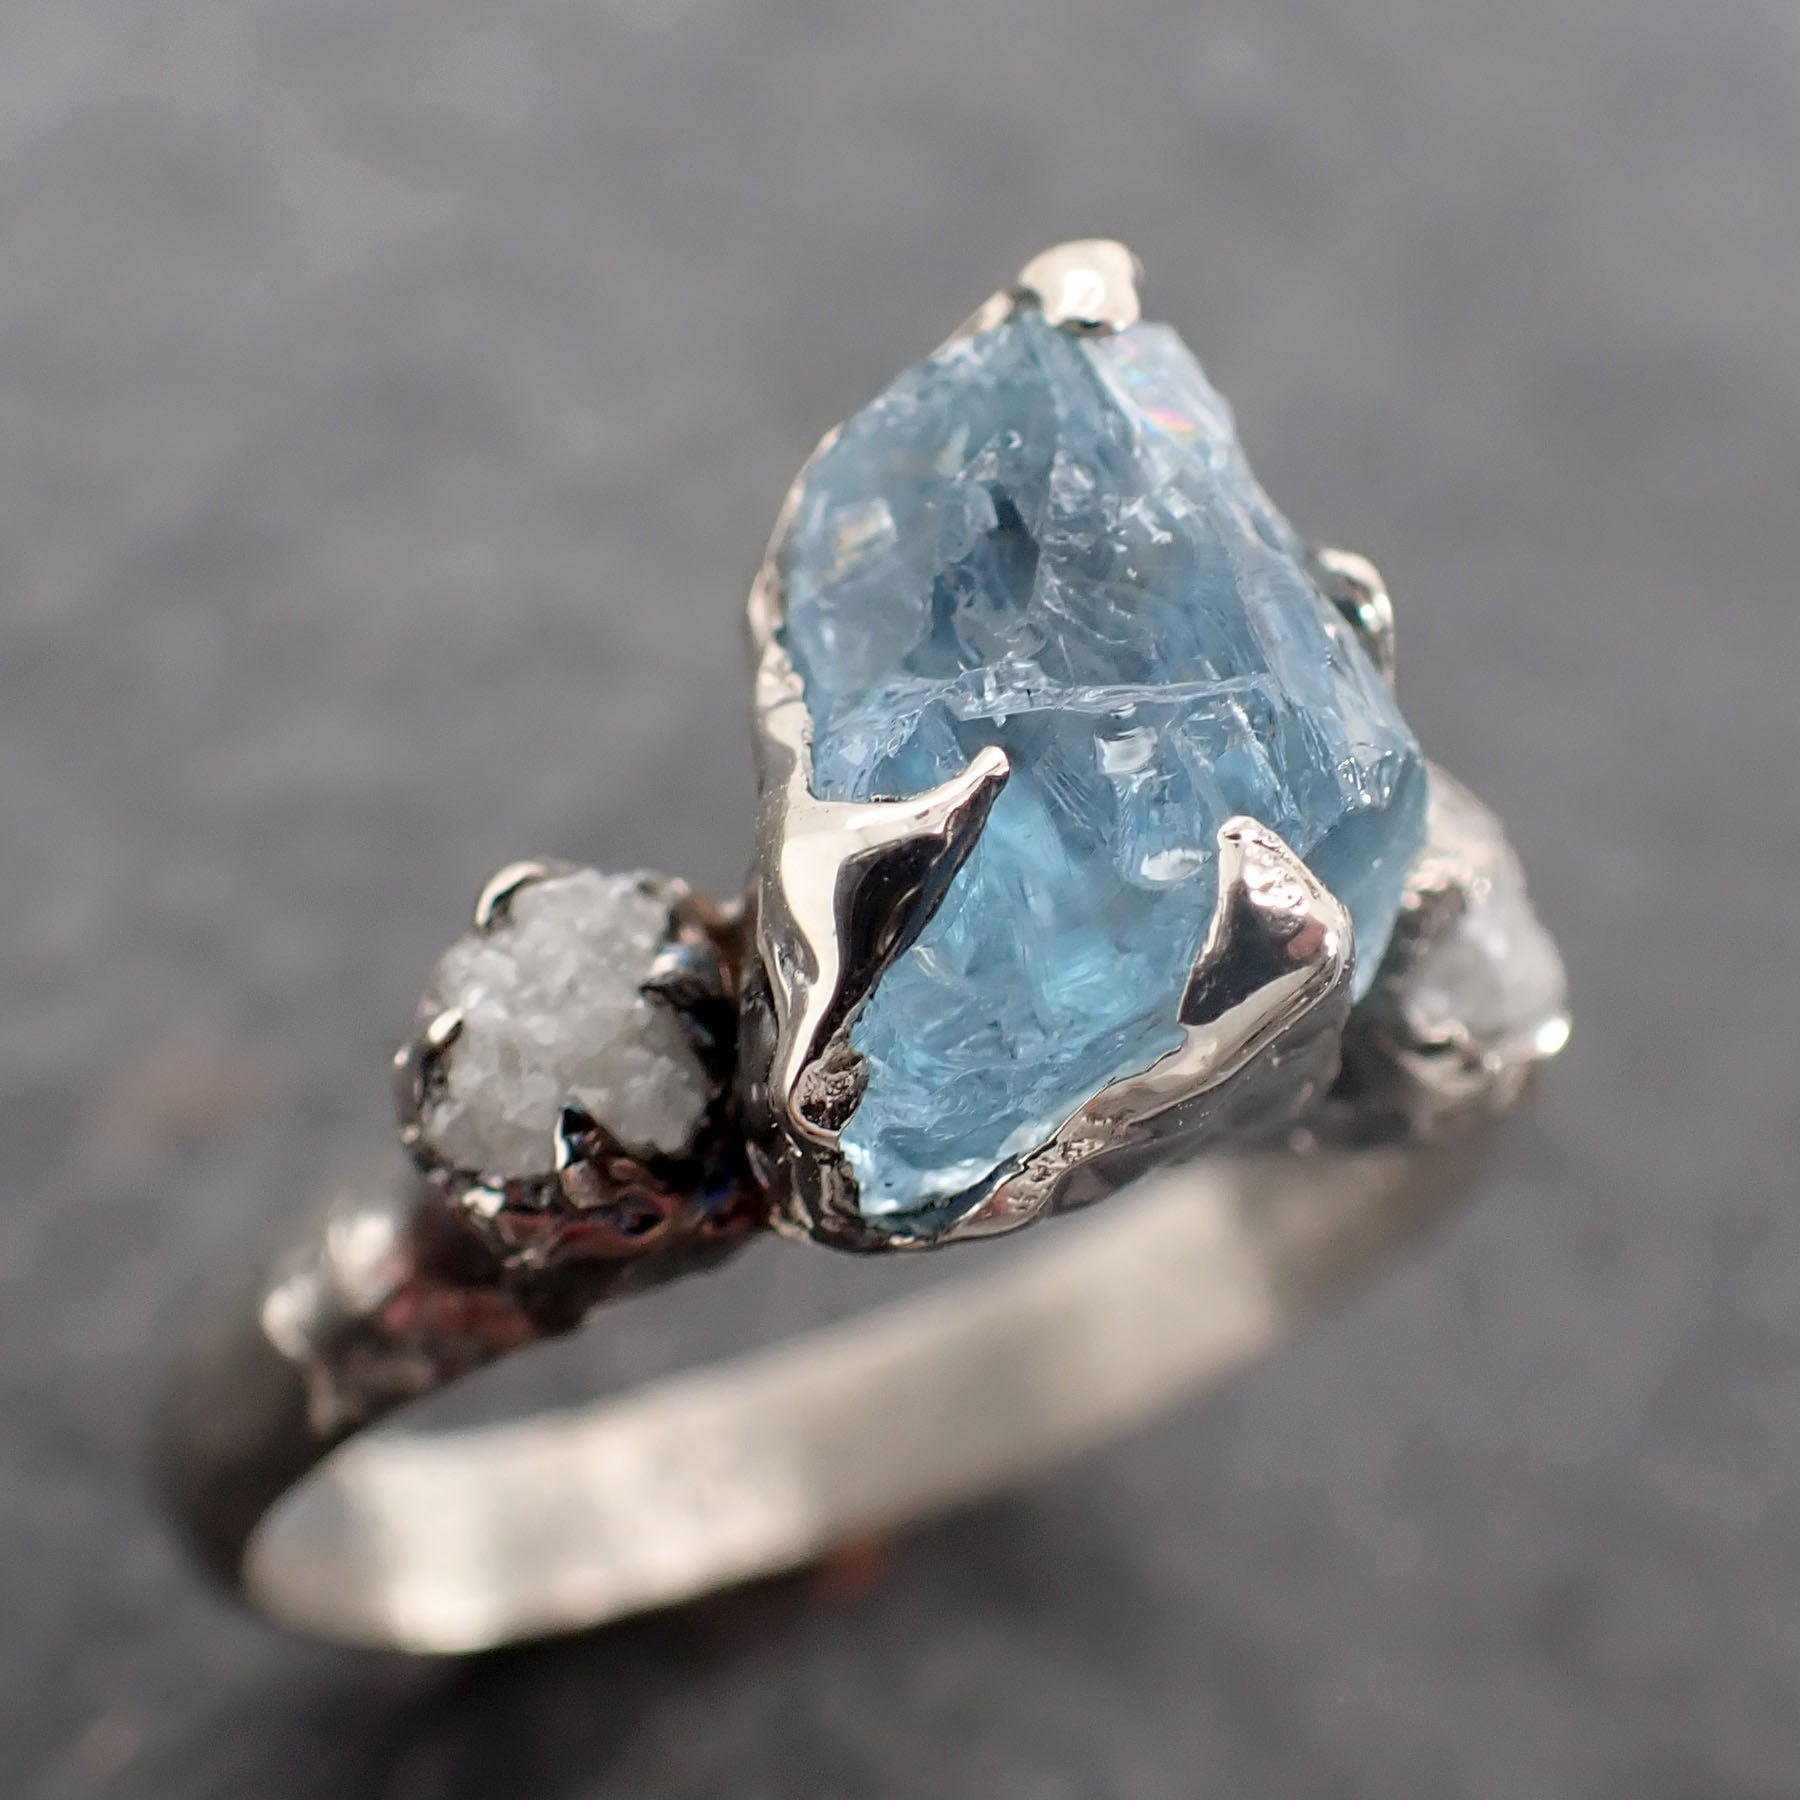 raw uncut aquamarine diamond white 14k gold engagement ring wedding ring custom one of a kind gemstone ring multi stone ring 2506 Alternative Engagement